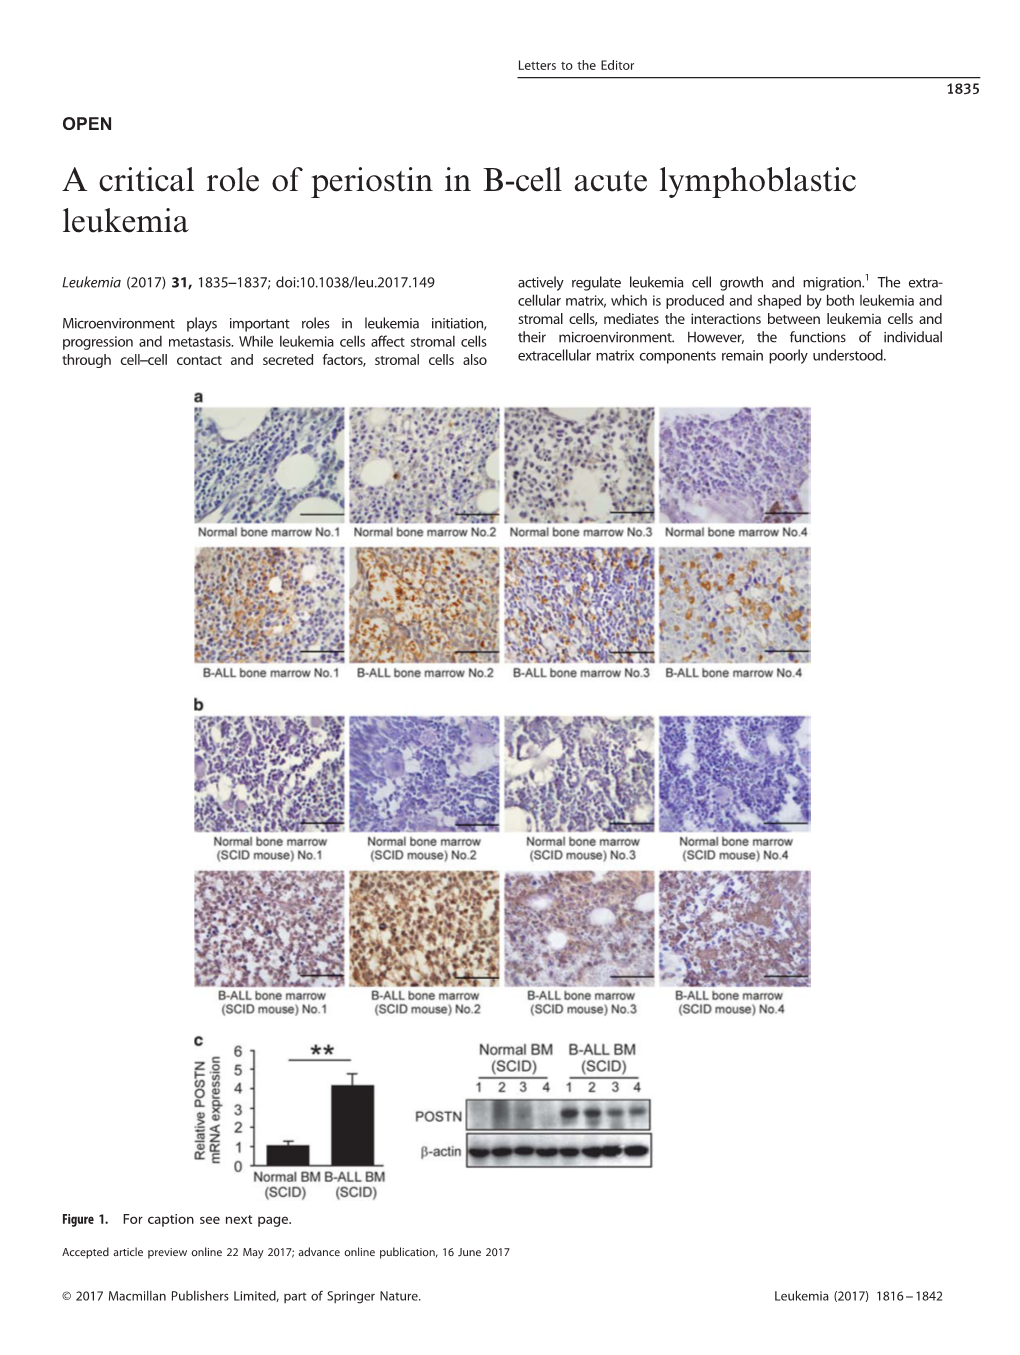 A Critical Role of Periostin in B-Cell Acute Lymphoblastic Leukemia